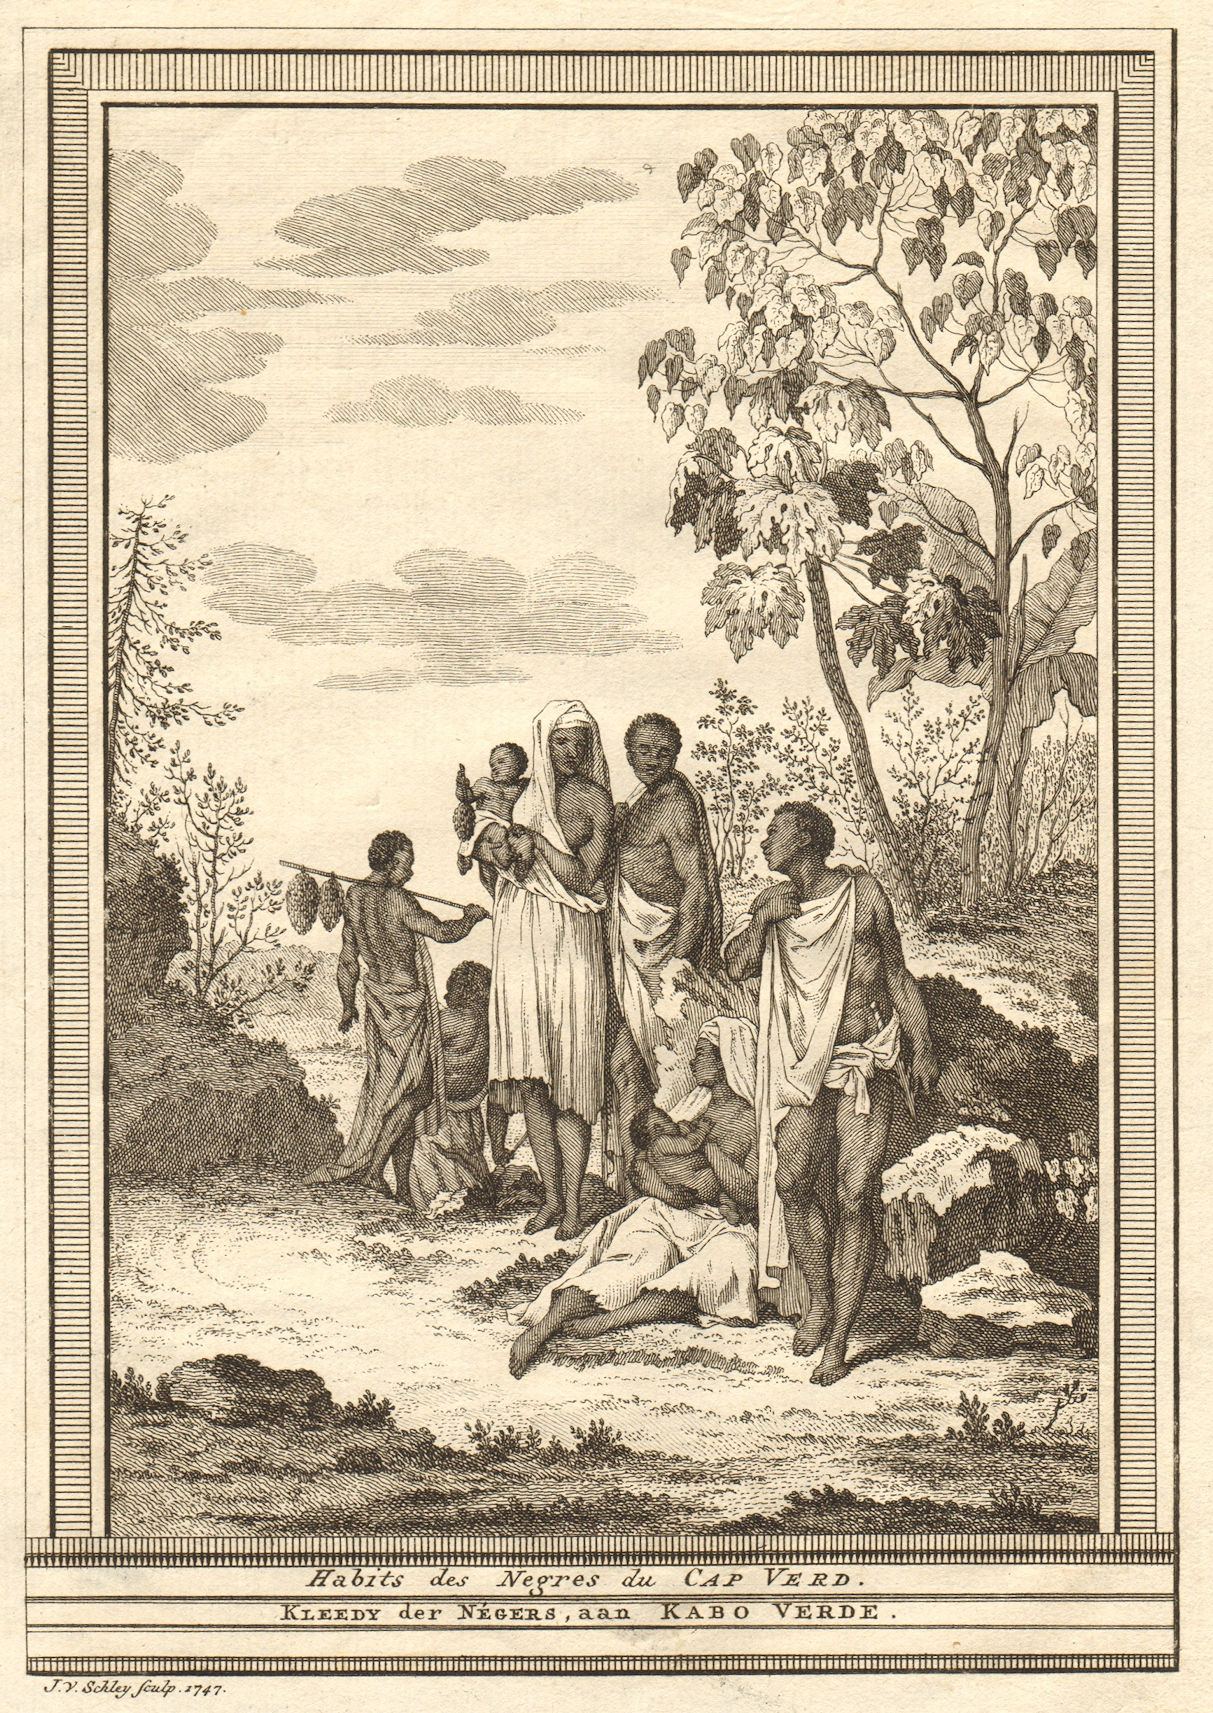 Associate Product 'Habits des Négres du Cap-Verd'. Cap-Vert, Dakar, Senegal. Dress. SCHLEY 1747